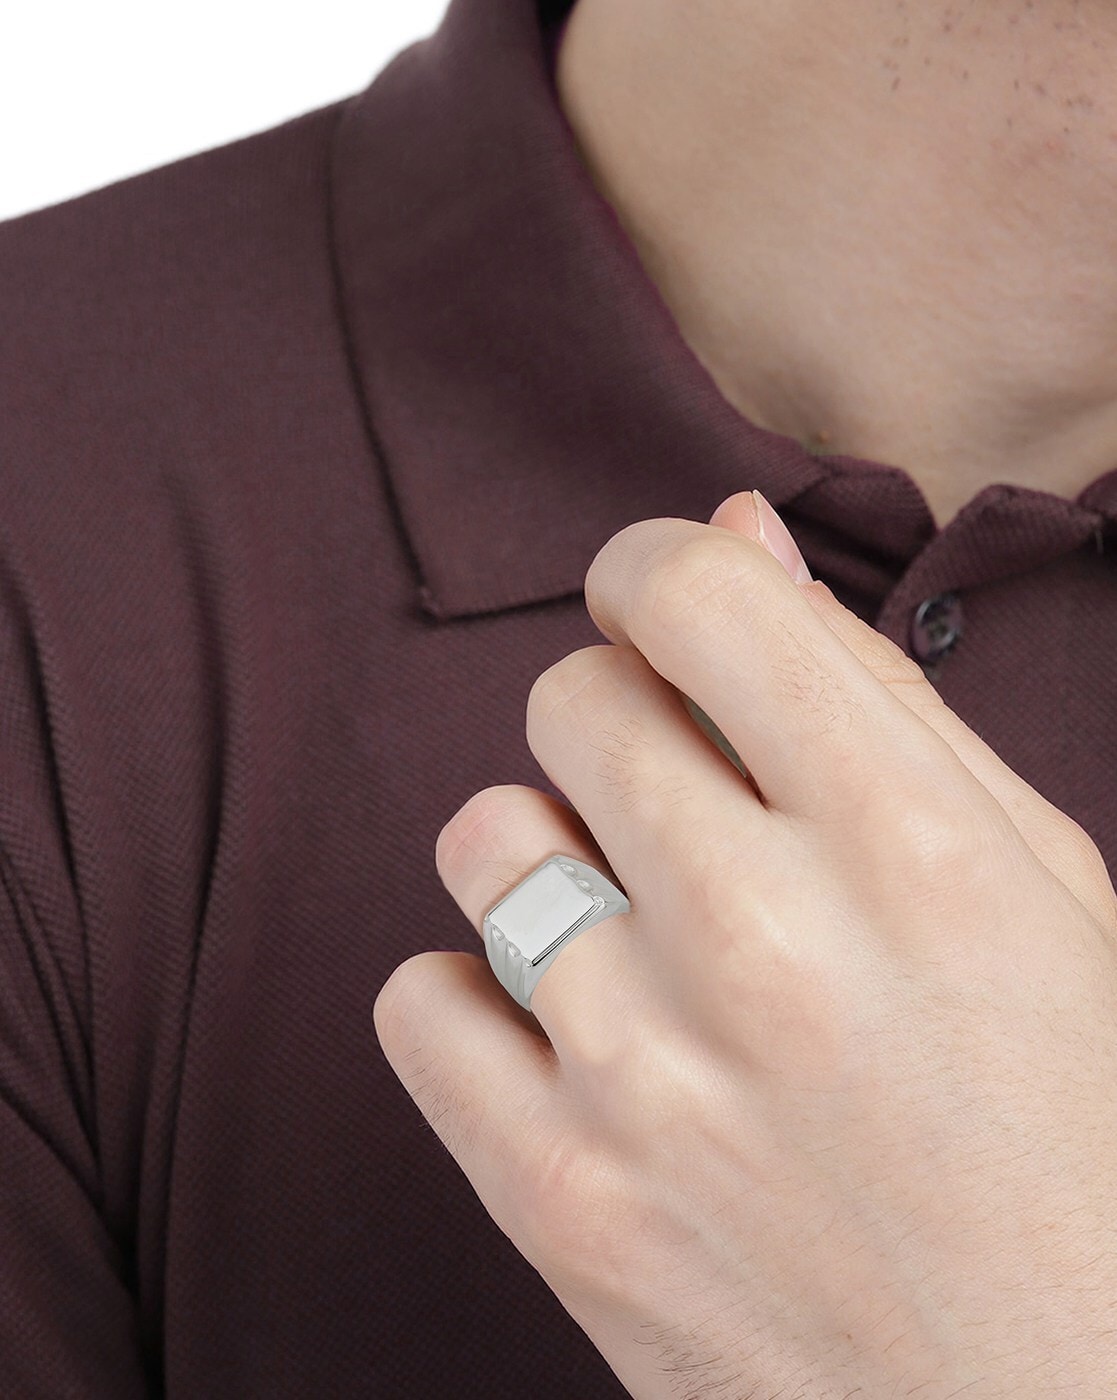 Couple full diamond open ring for women men girls teen engagement wedding  jewelry adjustable s925 silver simple | Fruugo KR